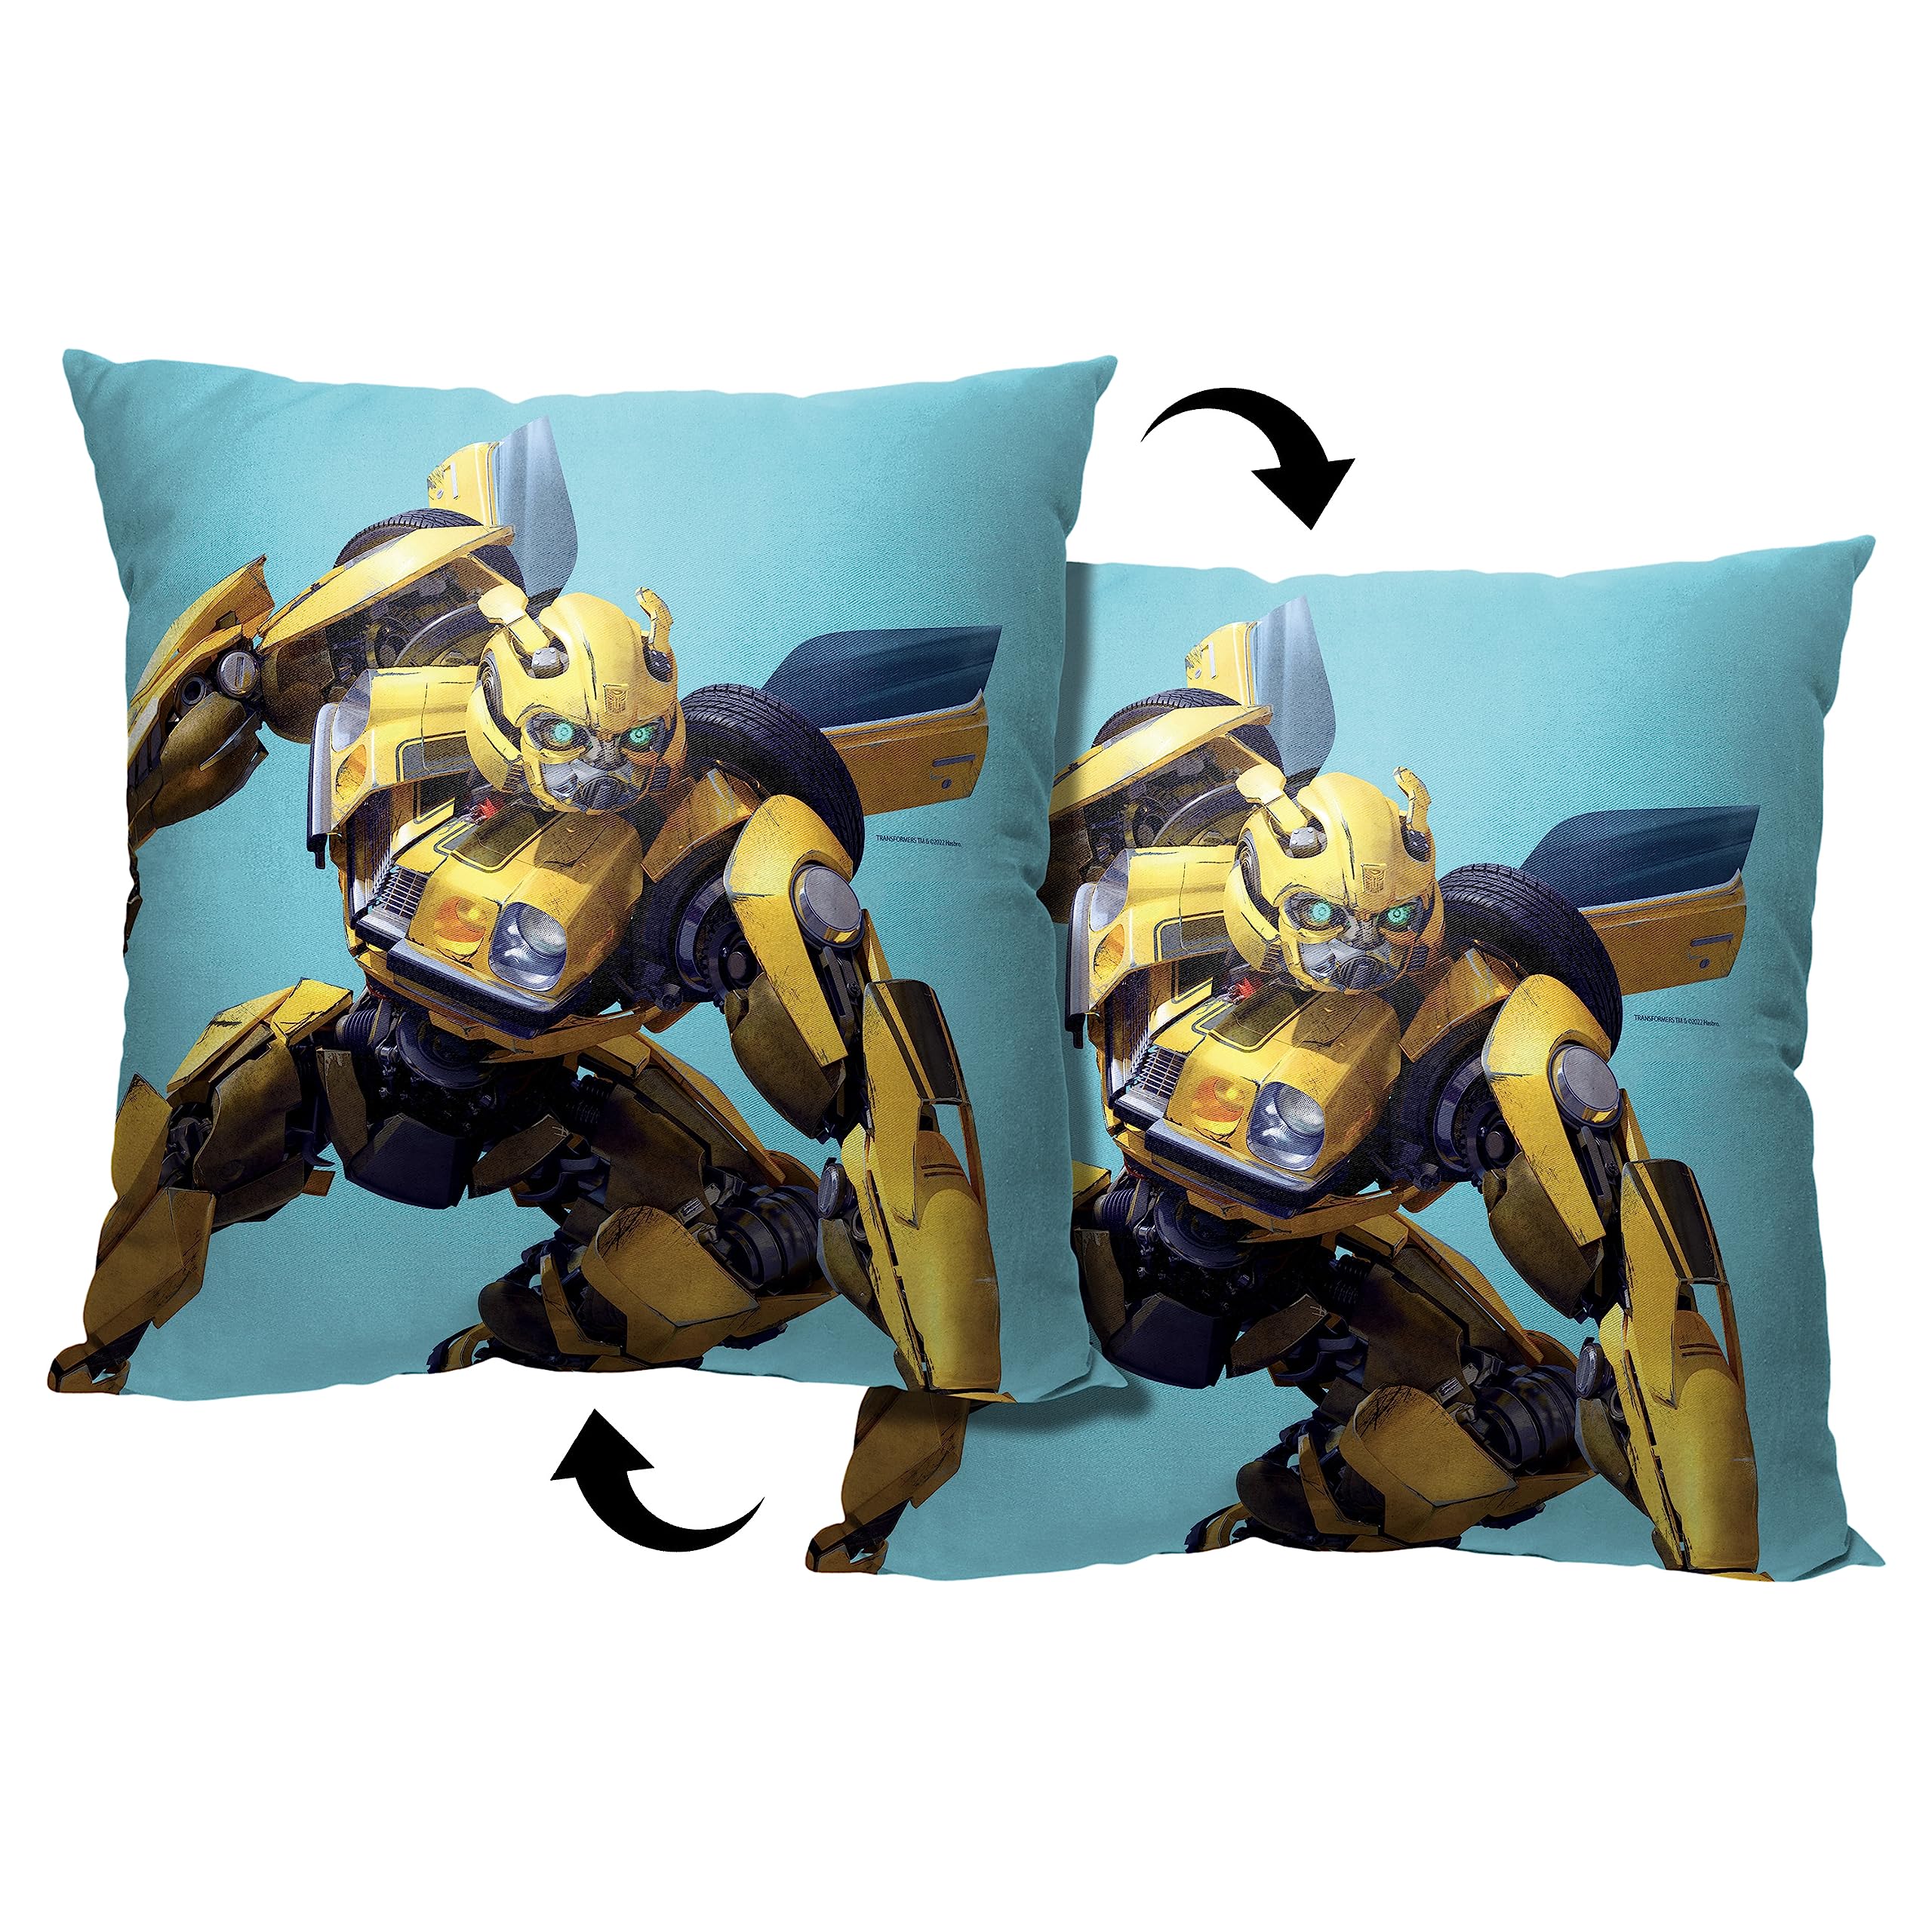 Northwest Transformers Pillow, 18